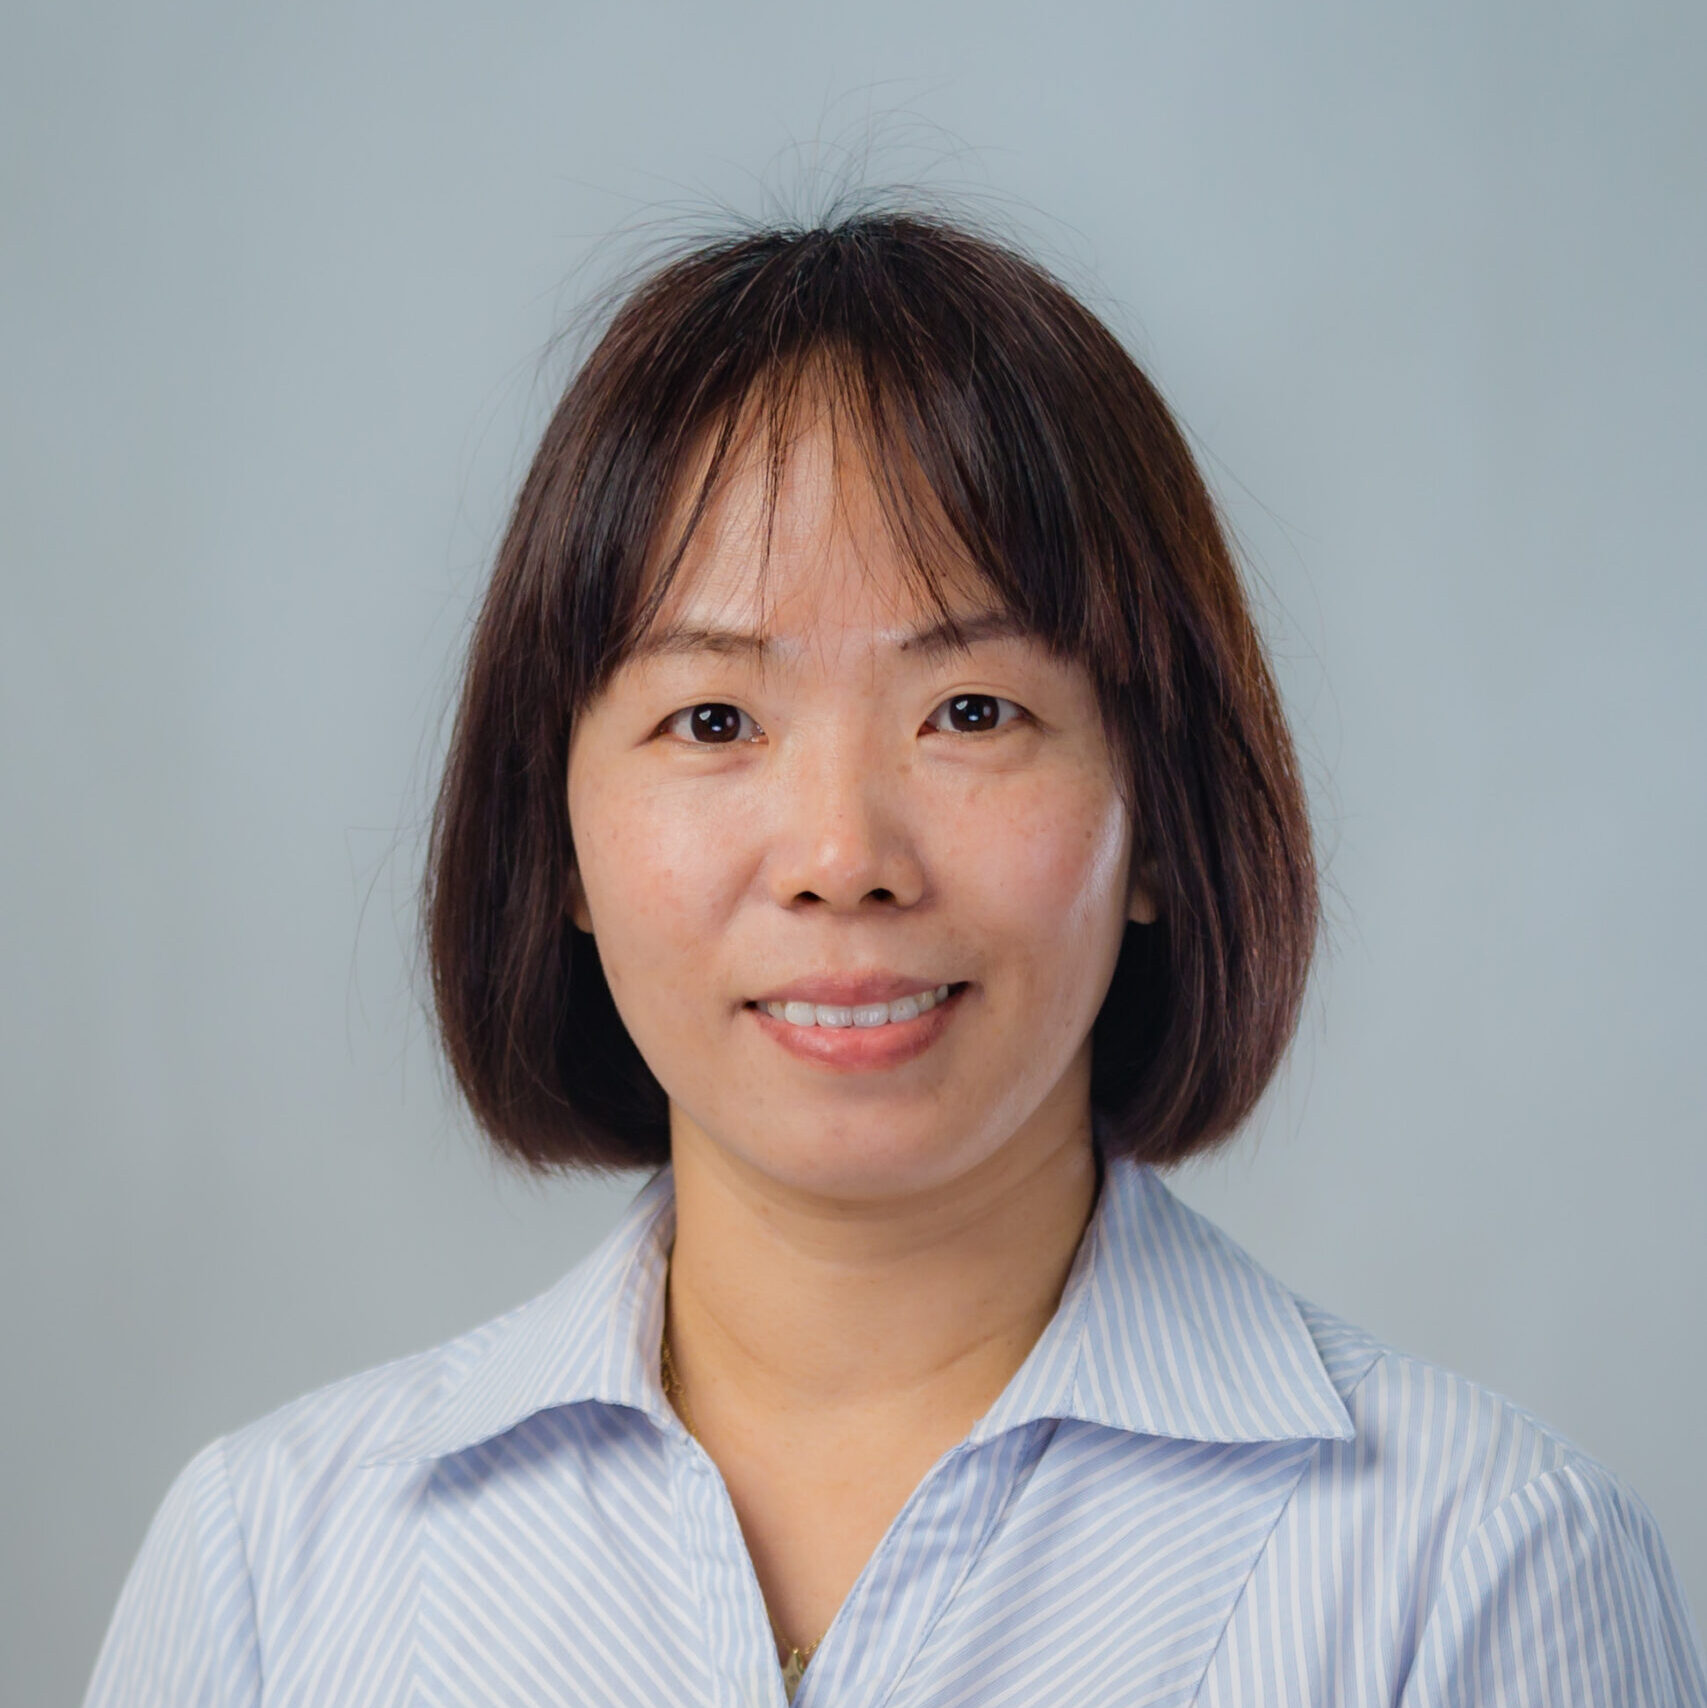 Portrait of Cindy Lu, a Mandarin teacher at Clifford International School in Panyu, Guangzhou, China